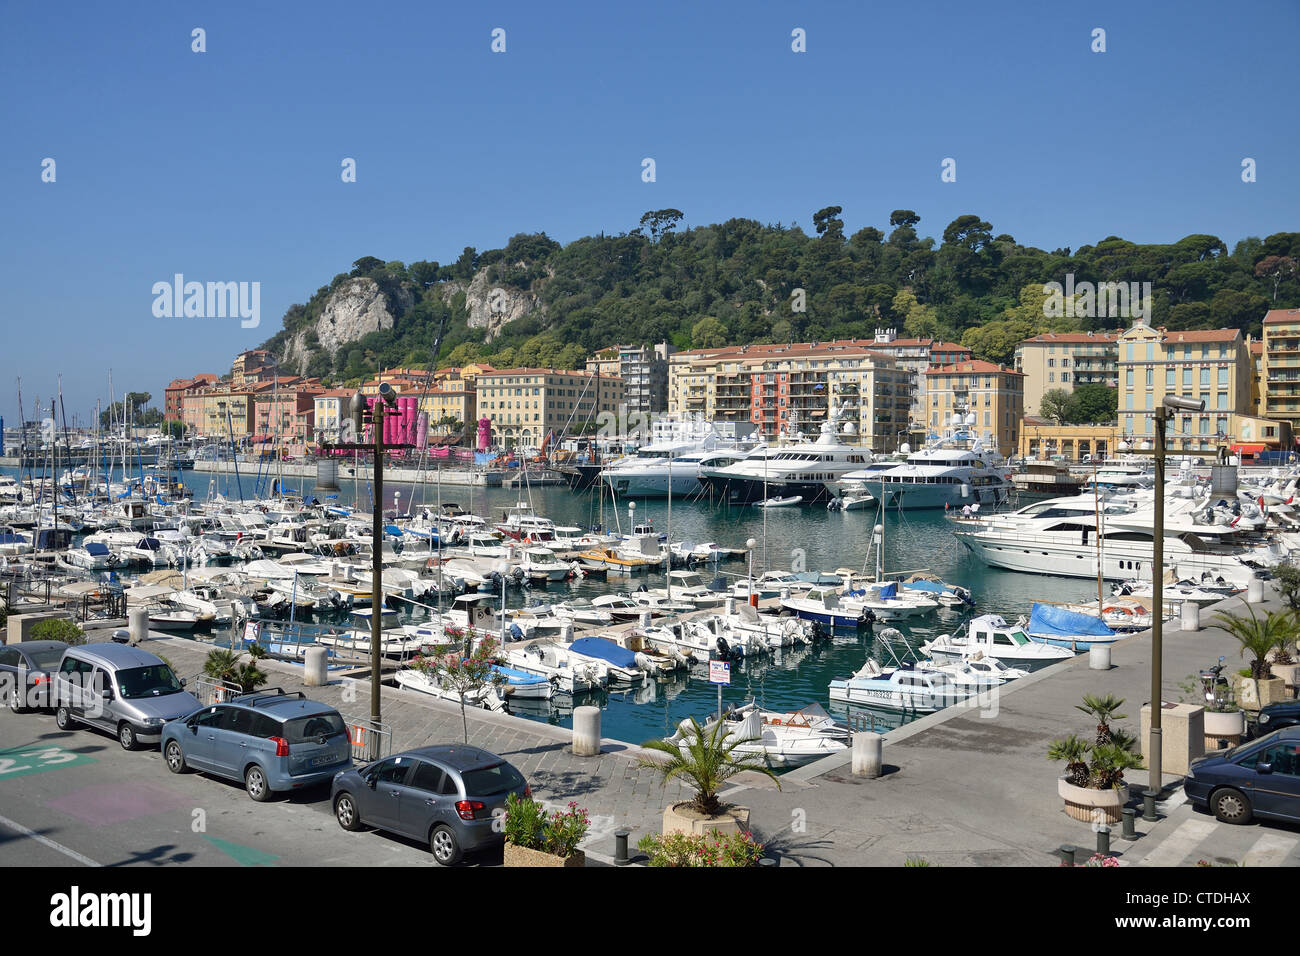 Boat marina in Vieux Port (Old Port) Nice, Nice, Côte d'Azur, Alpes-Maritimes, Provence-Alpes-Côte d'Azur, France Stock Photo